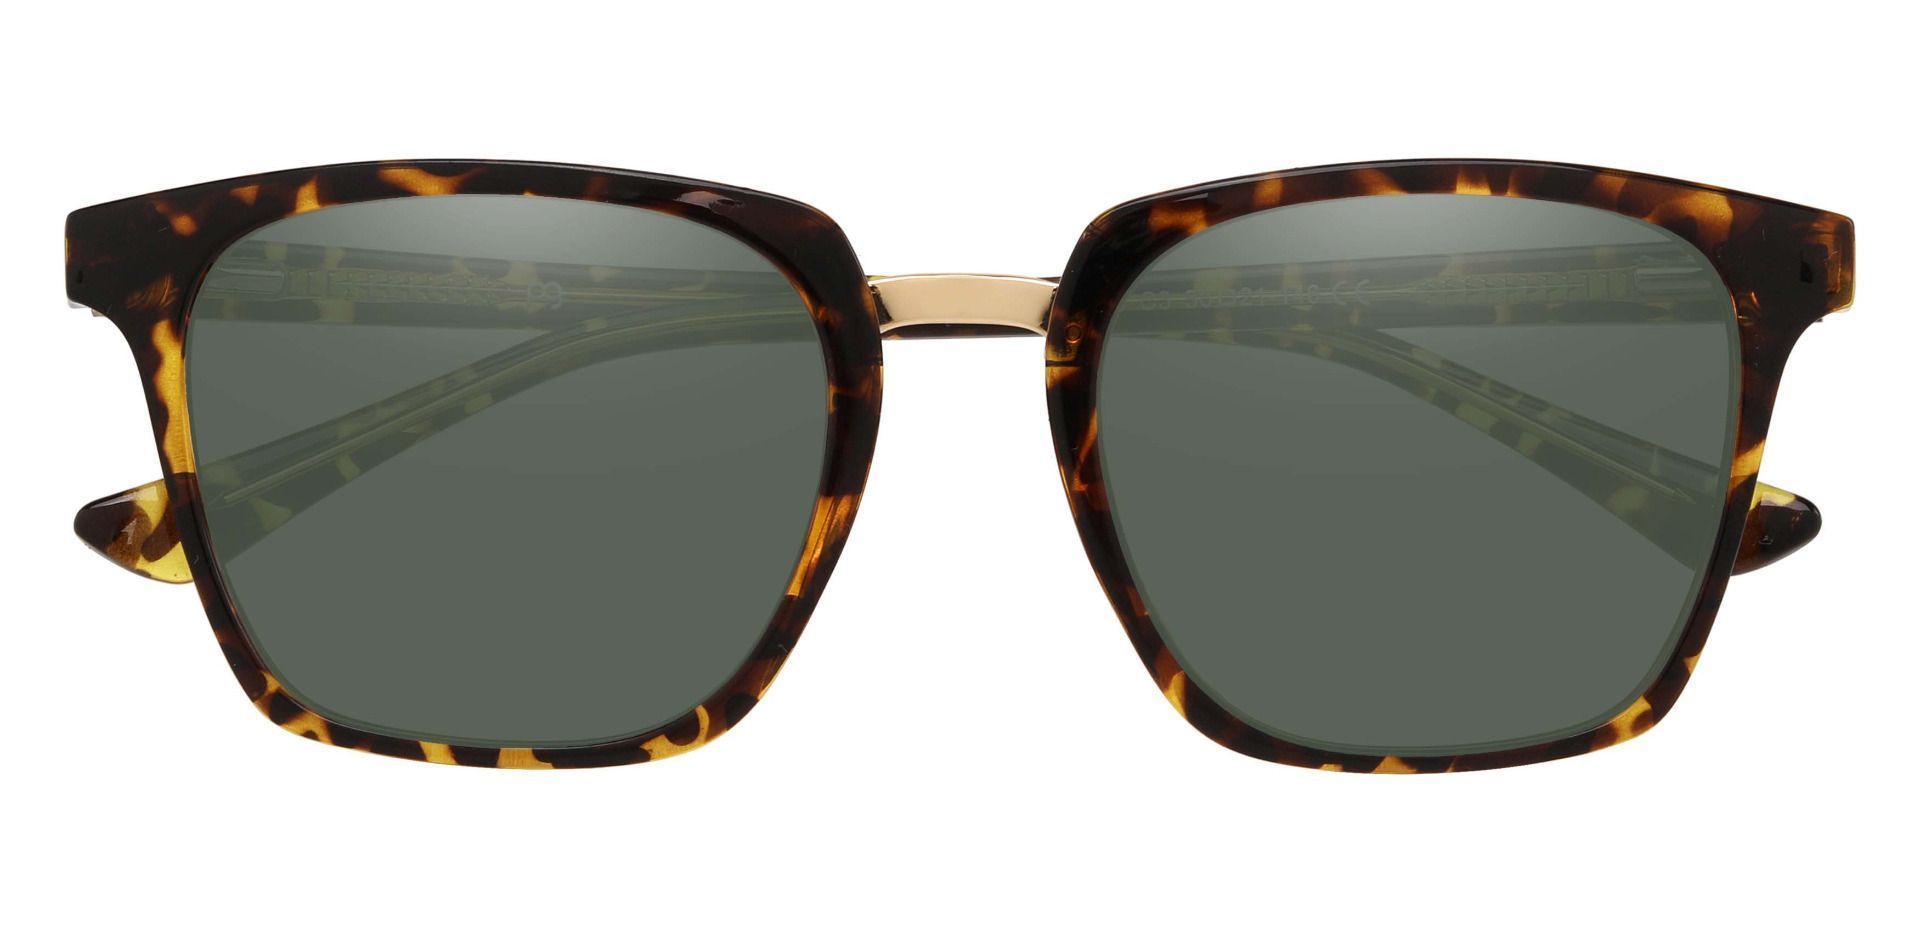 Delta Square Progressive Sunglasses - Tortoise Frame With Green Lenses